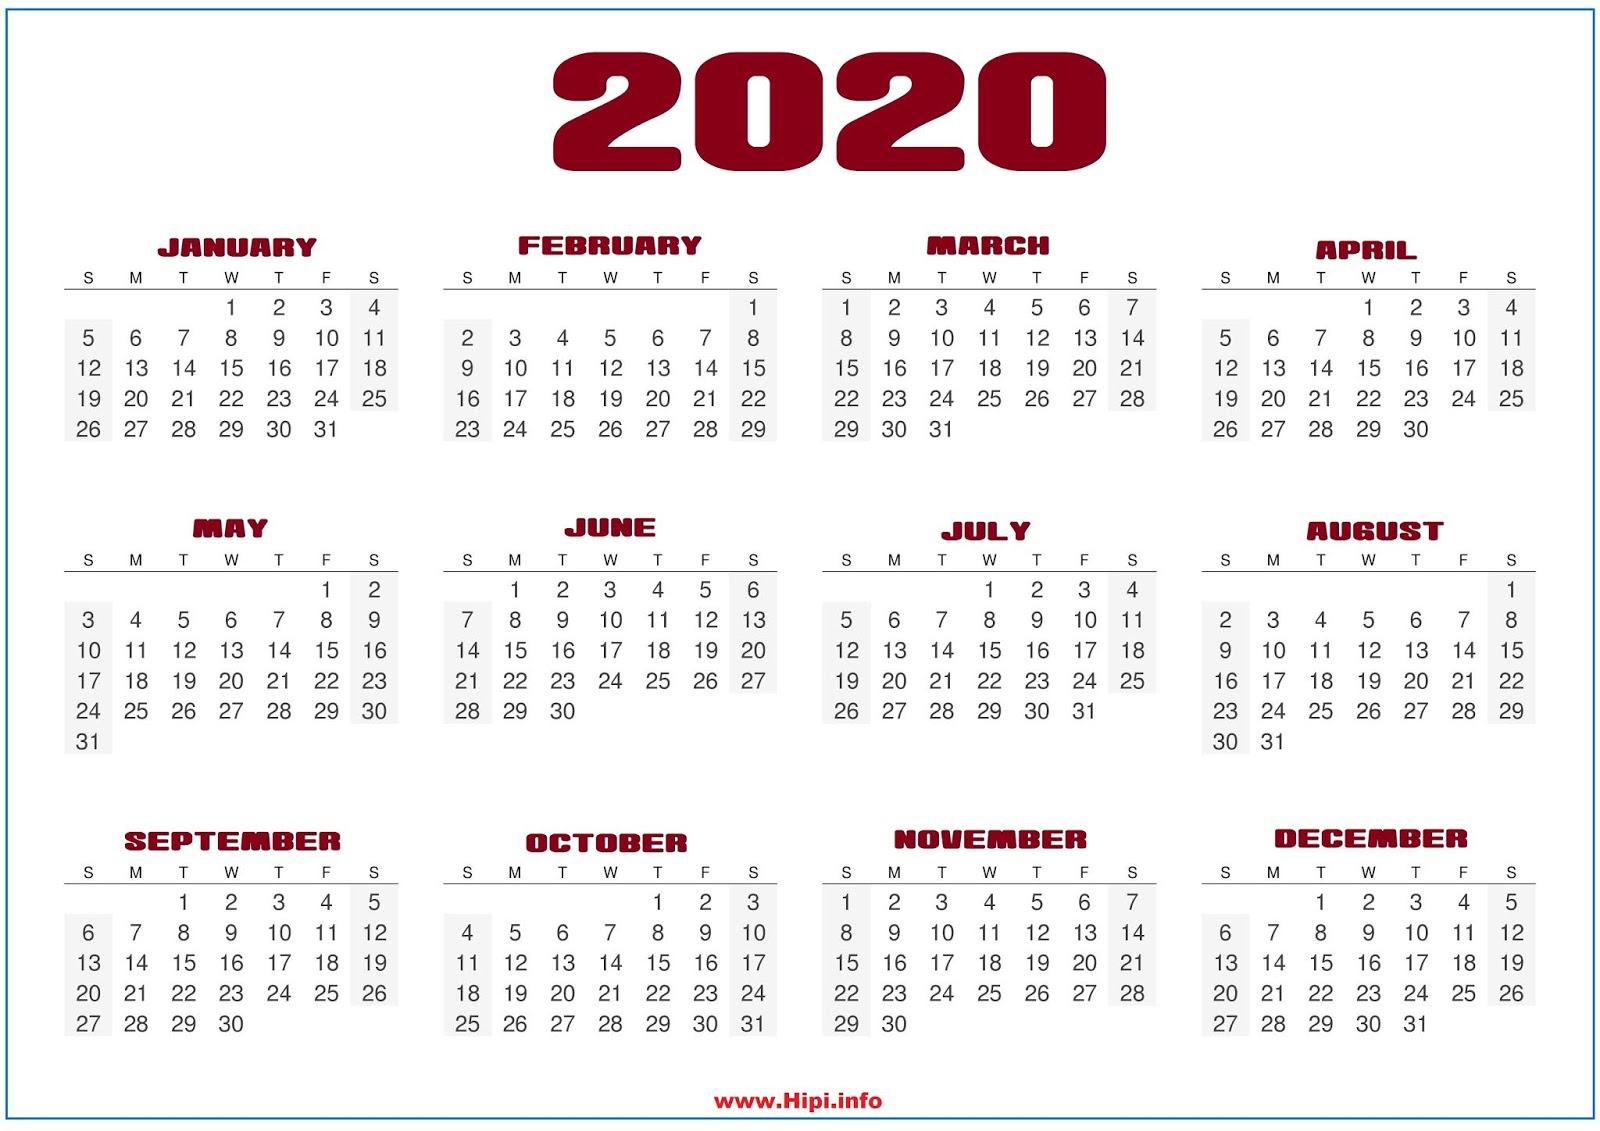 Download Kalender 2021 Hd Aesthetic : January 2021 Calendar Wallpapers Free Download | Calendar ...